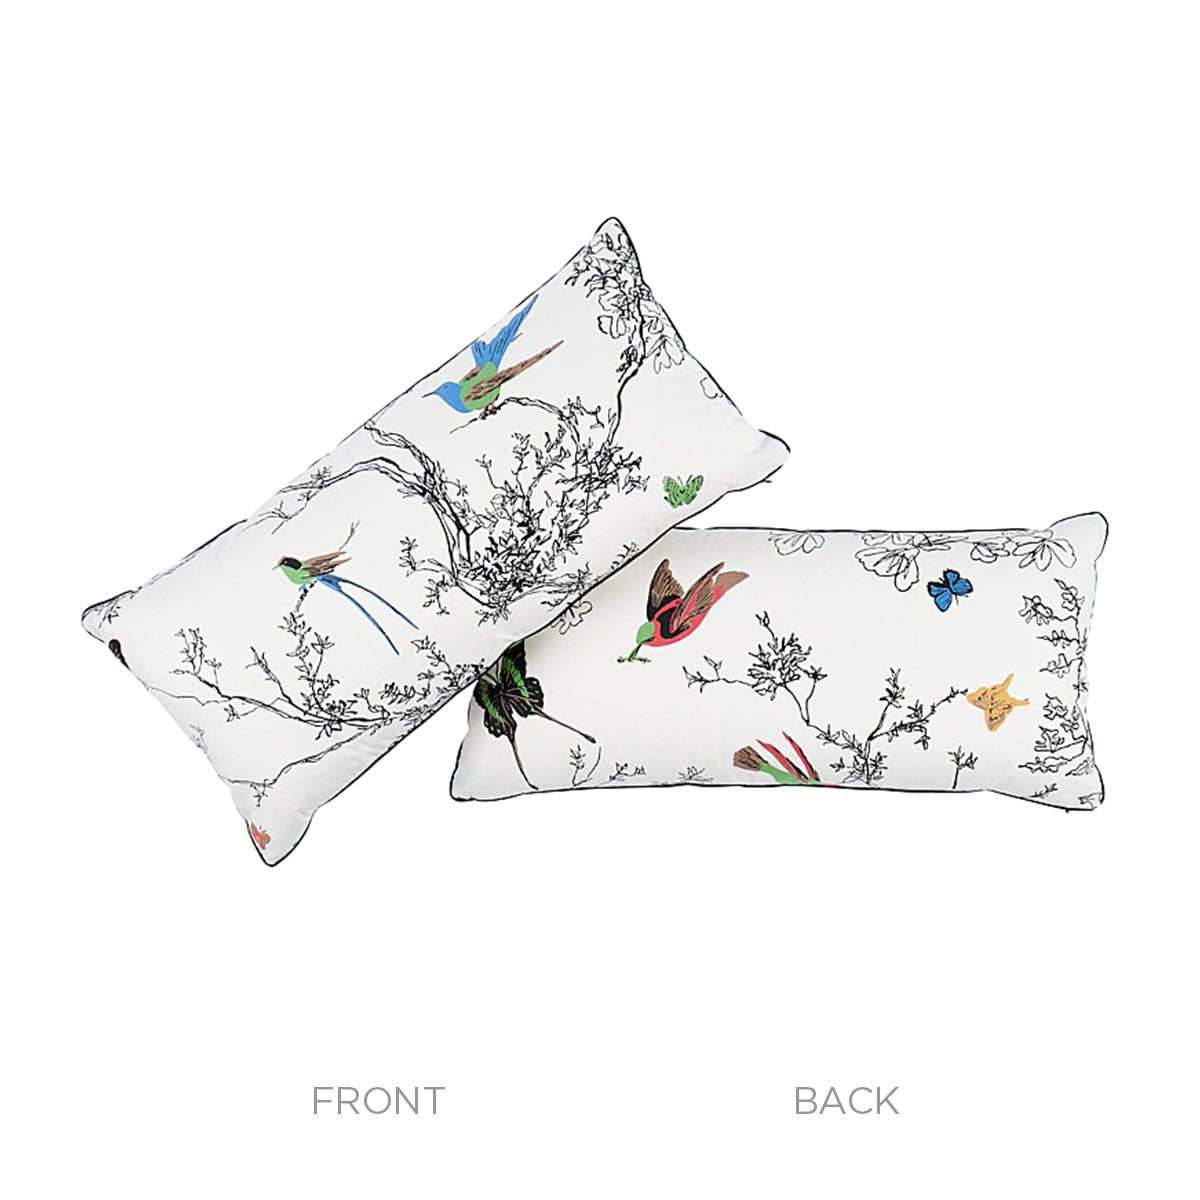 Birds & Butterflies Pillow | Multi on White